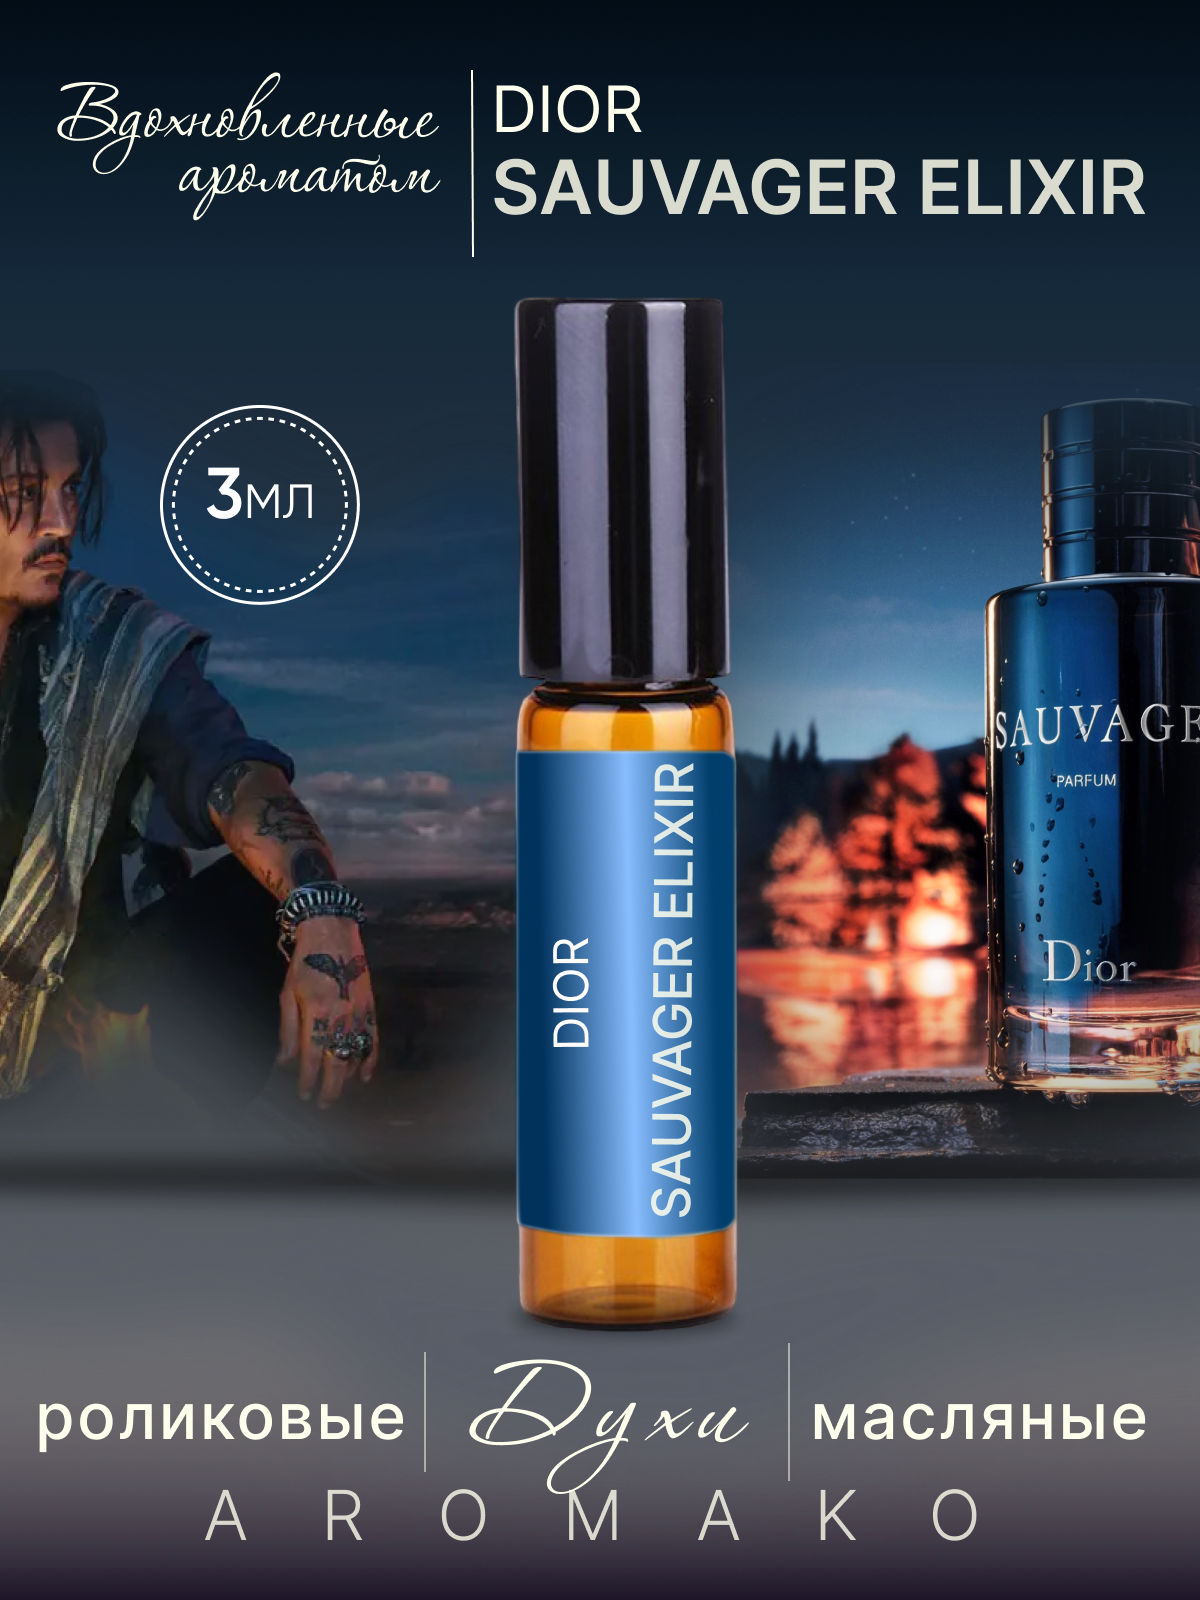 Духи масляные, парфюм - ролик по мотивам Dior, Sauvage Elixir 3 мл, AROMAKO